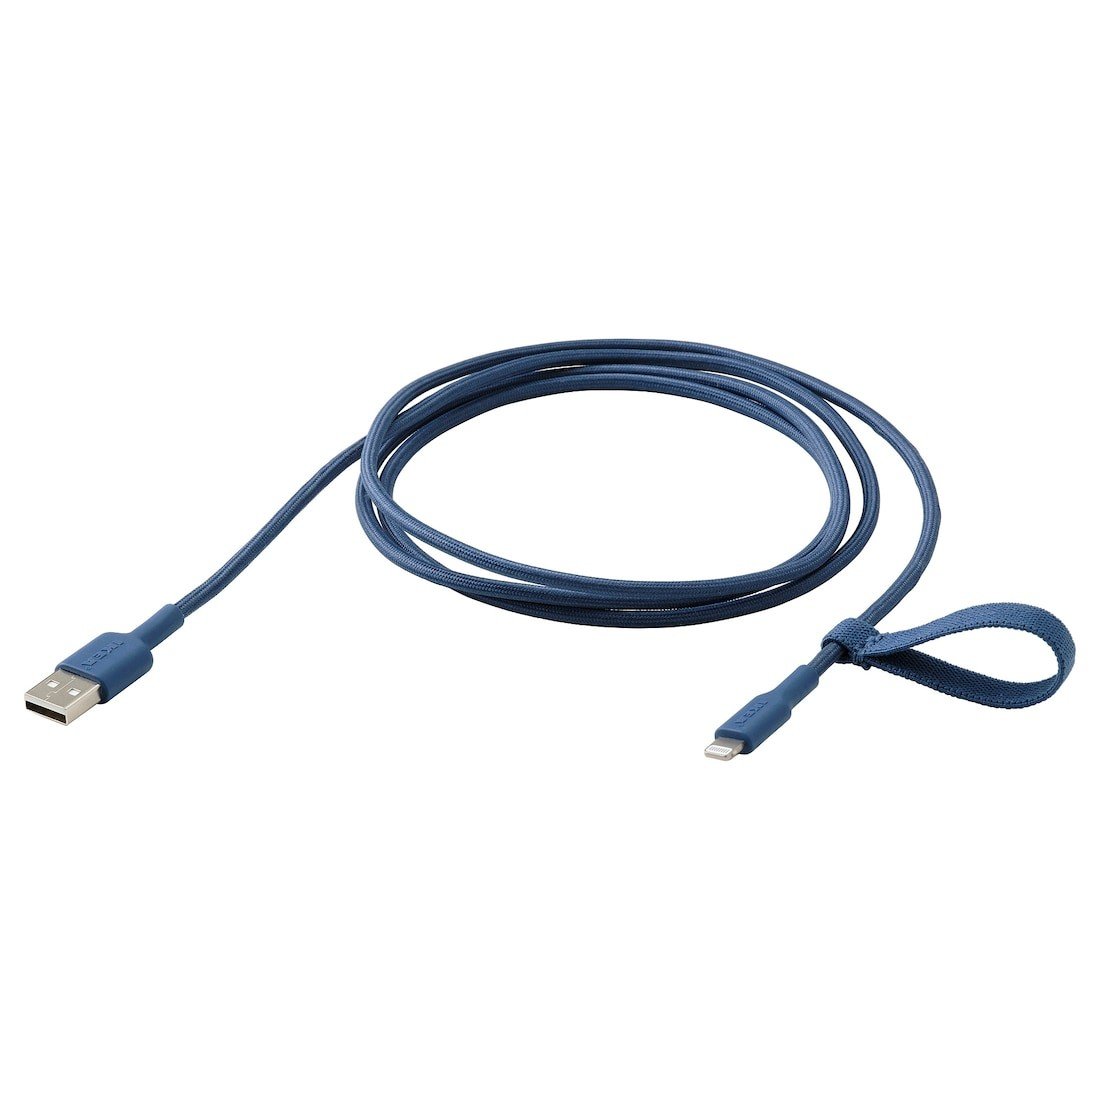 LILLHULT ЛИЛЛЬХУЛЬТ Кабель USB-A lightning, синий, 1.5 м